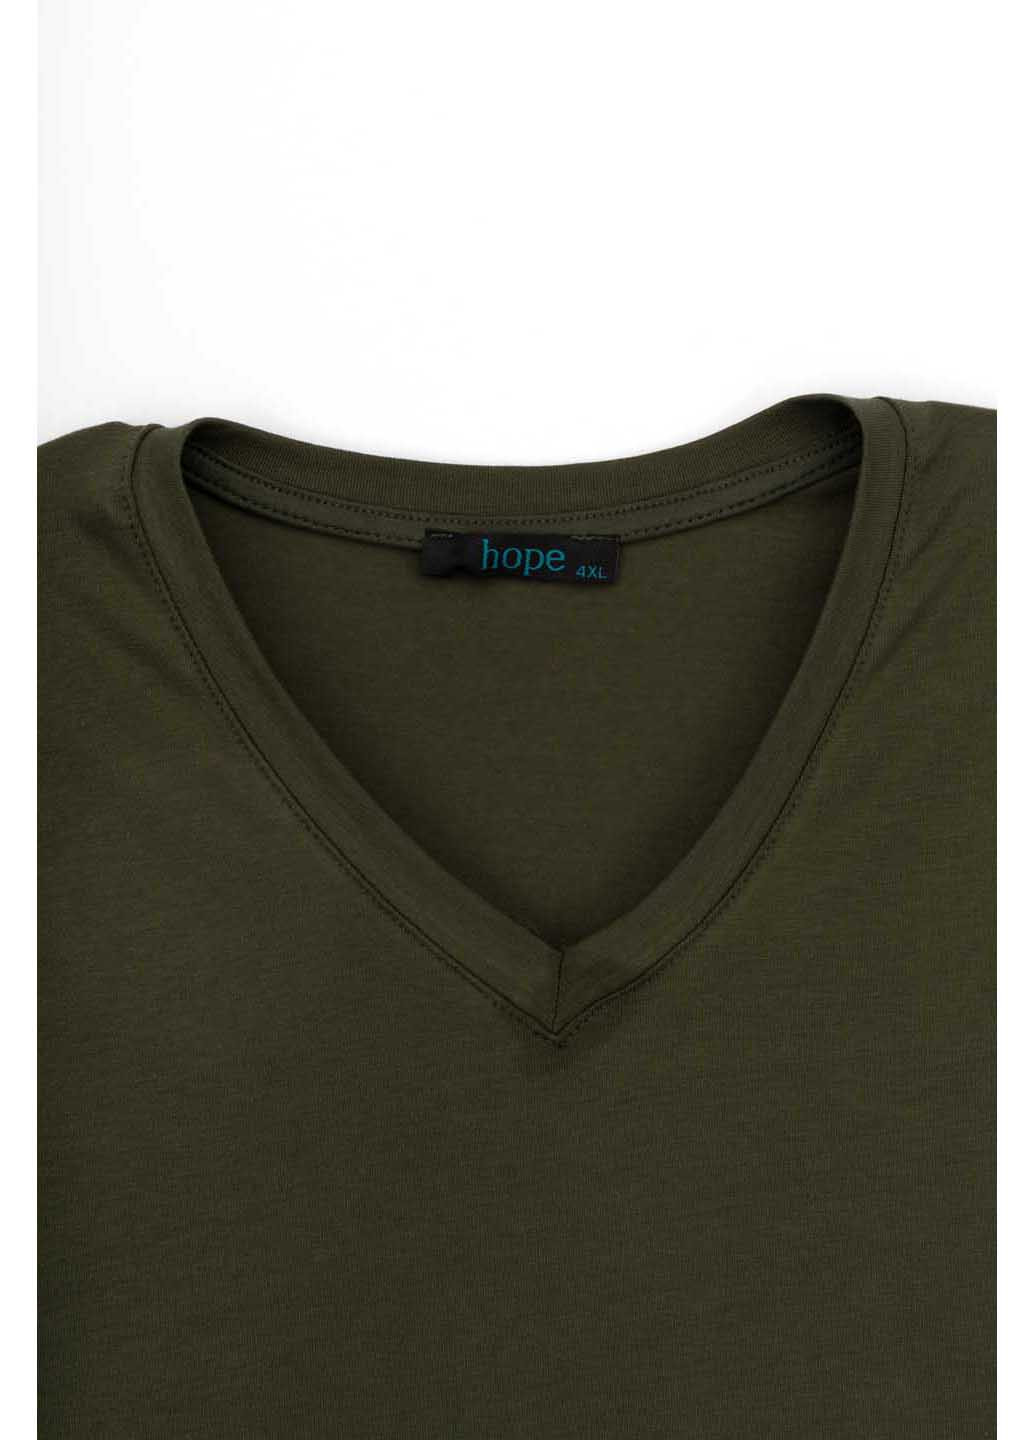 Хаки (оливковая) футболка однотонная Hope